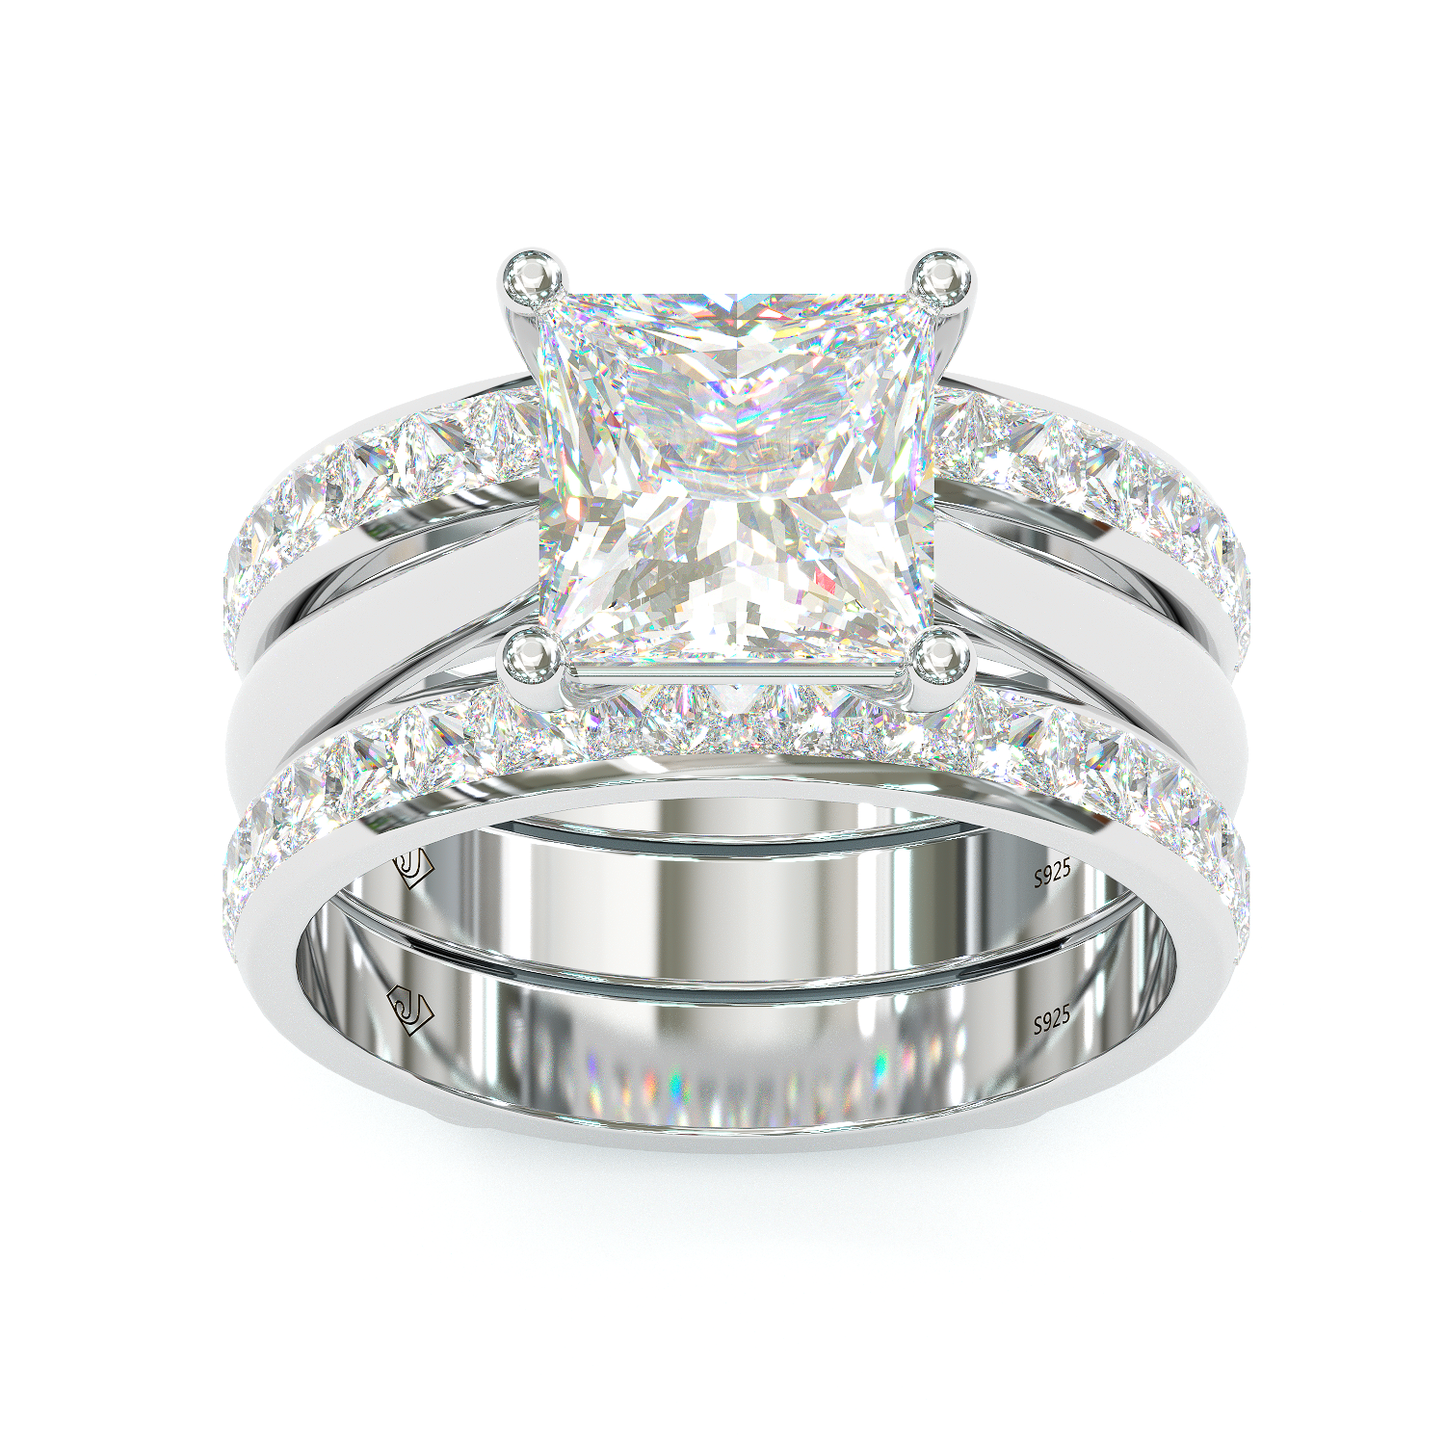 Jorrio handmade princess cut 2 pcs sterling silver wedding ring bridal set